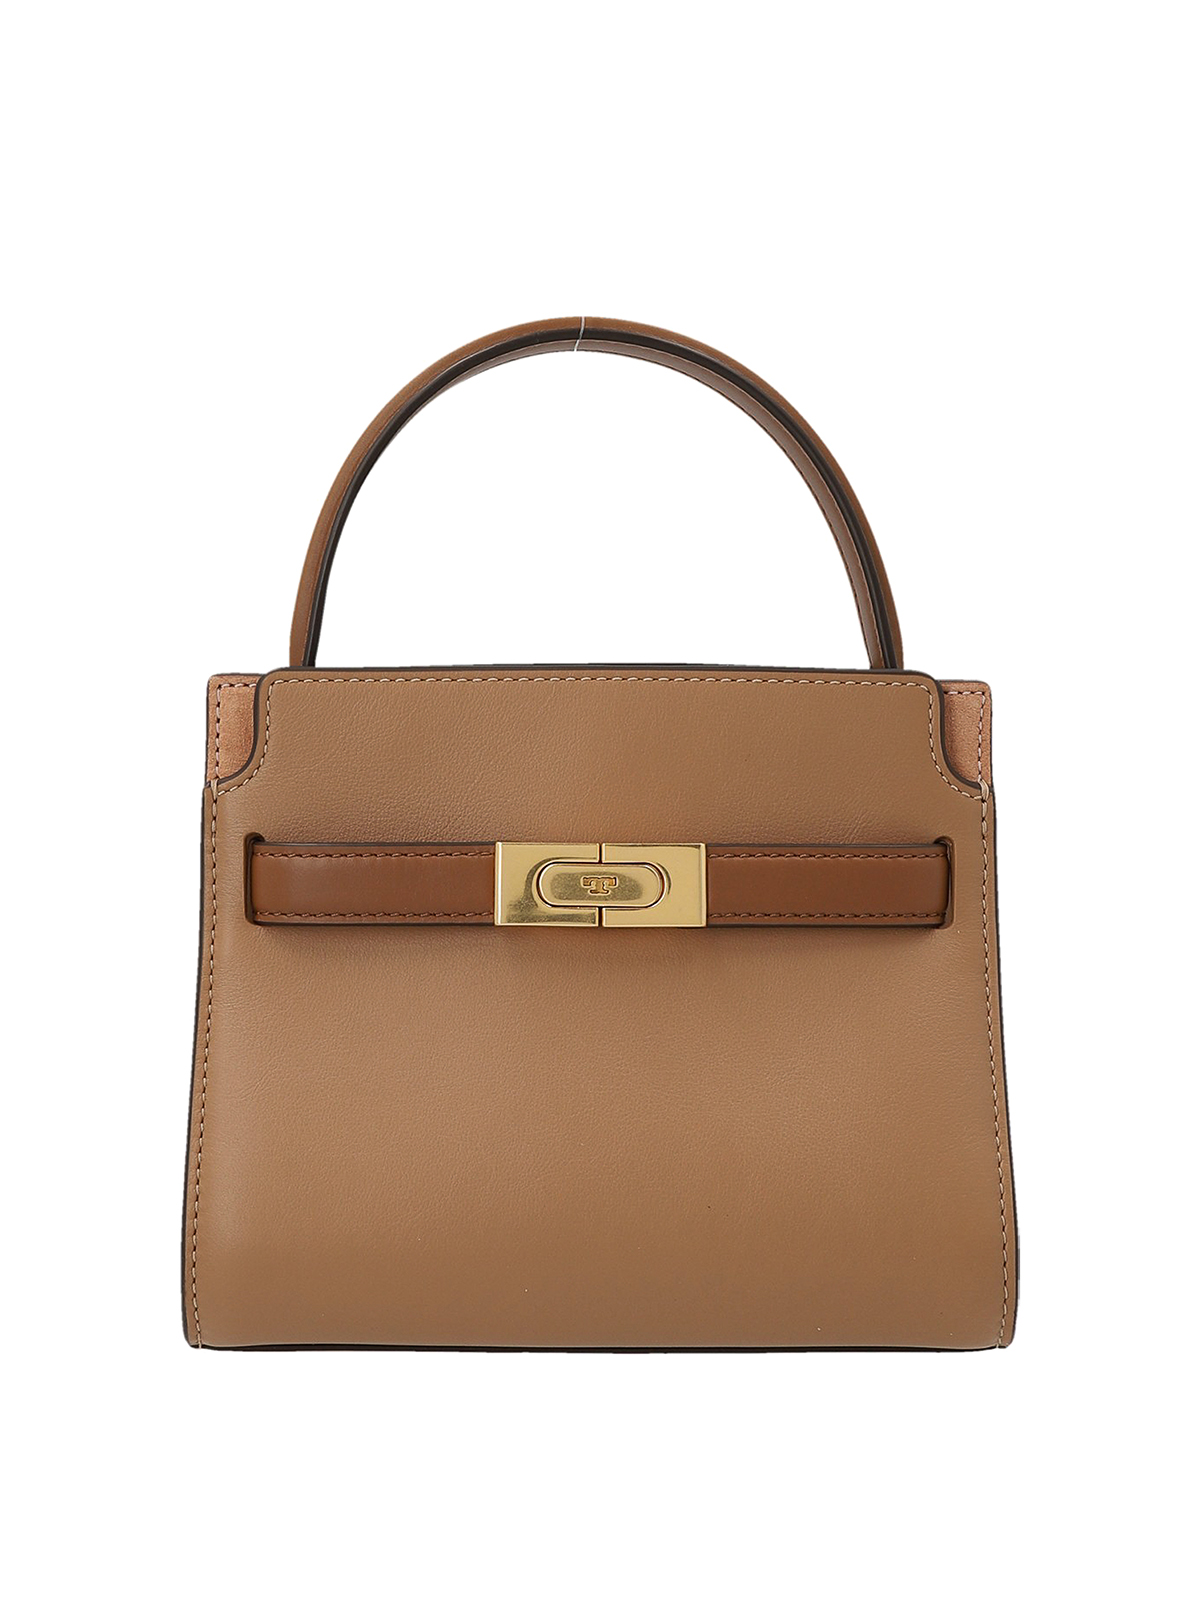 Lee Radziwill Petite Double Bag: Women's Handbags